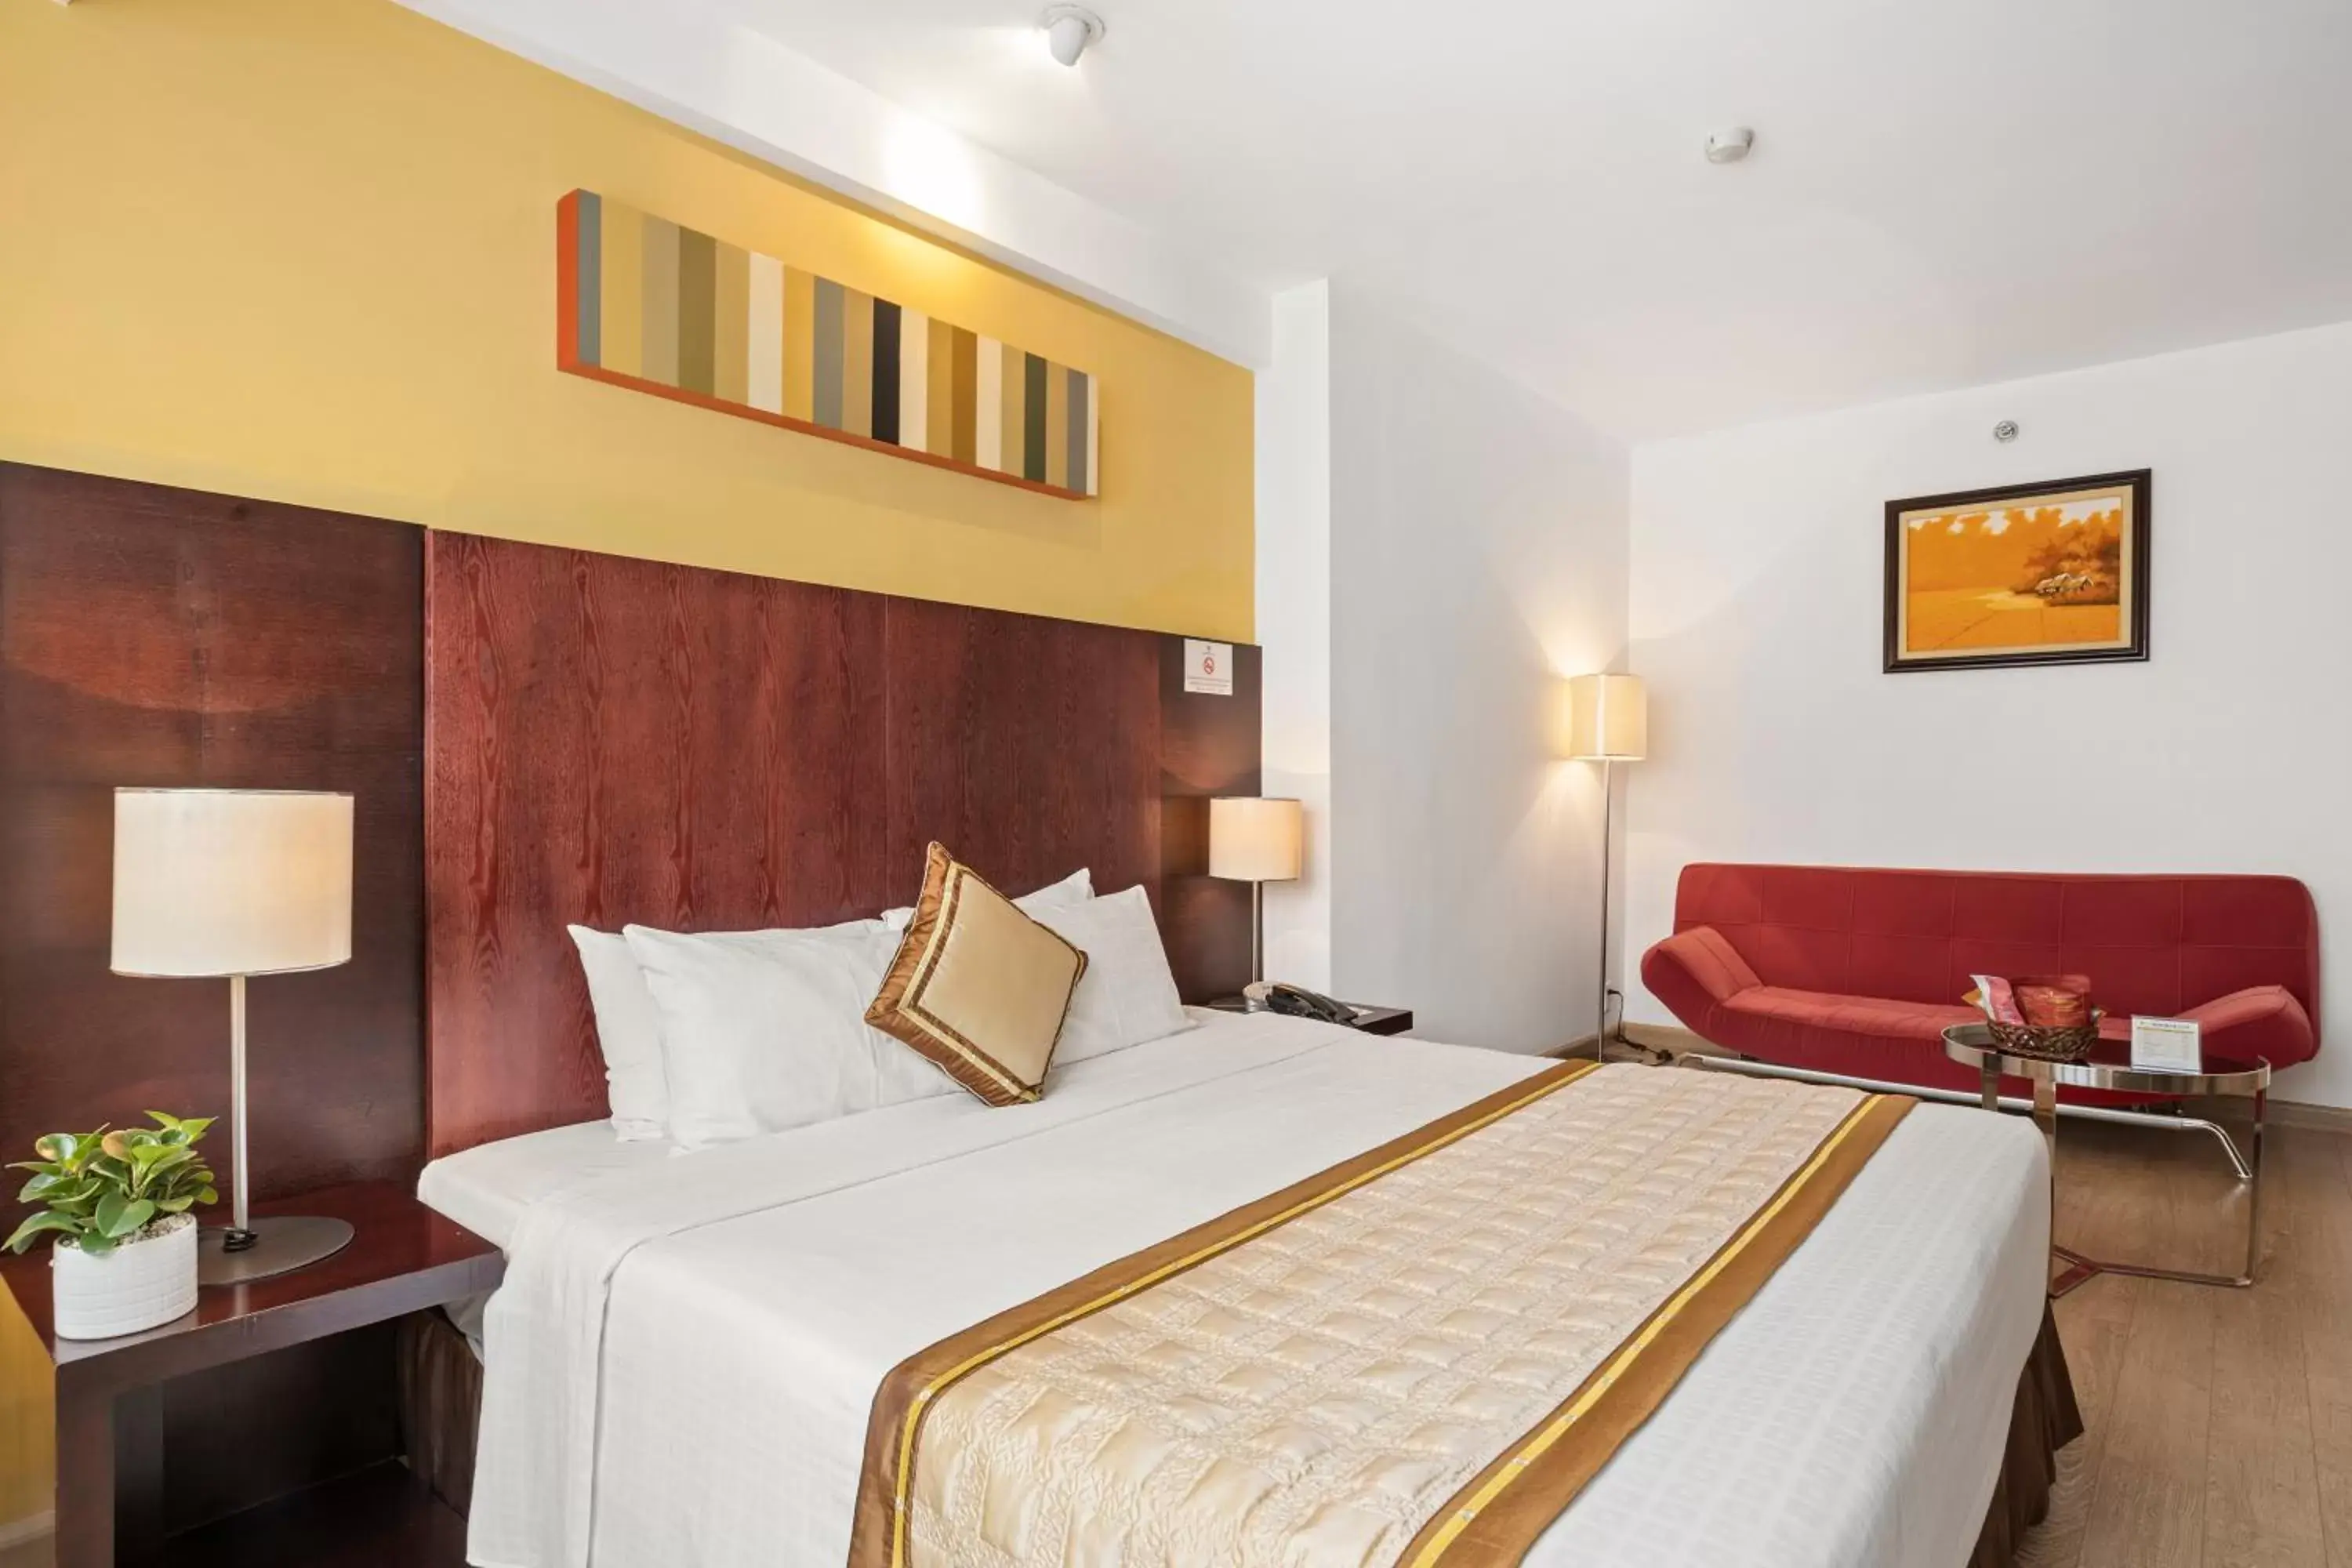 Bed in Bao Son International Hotel